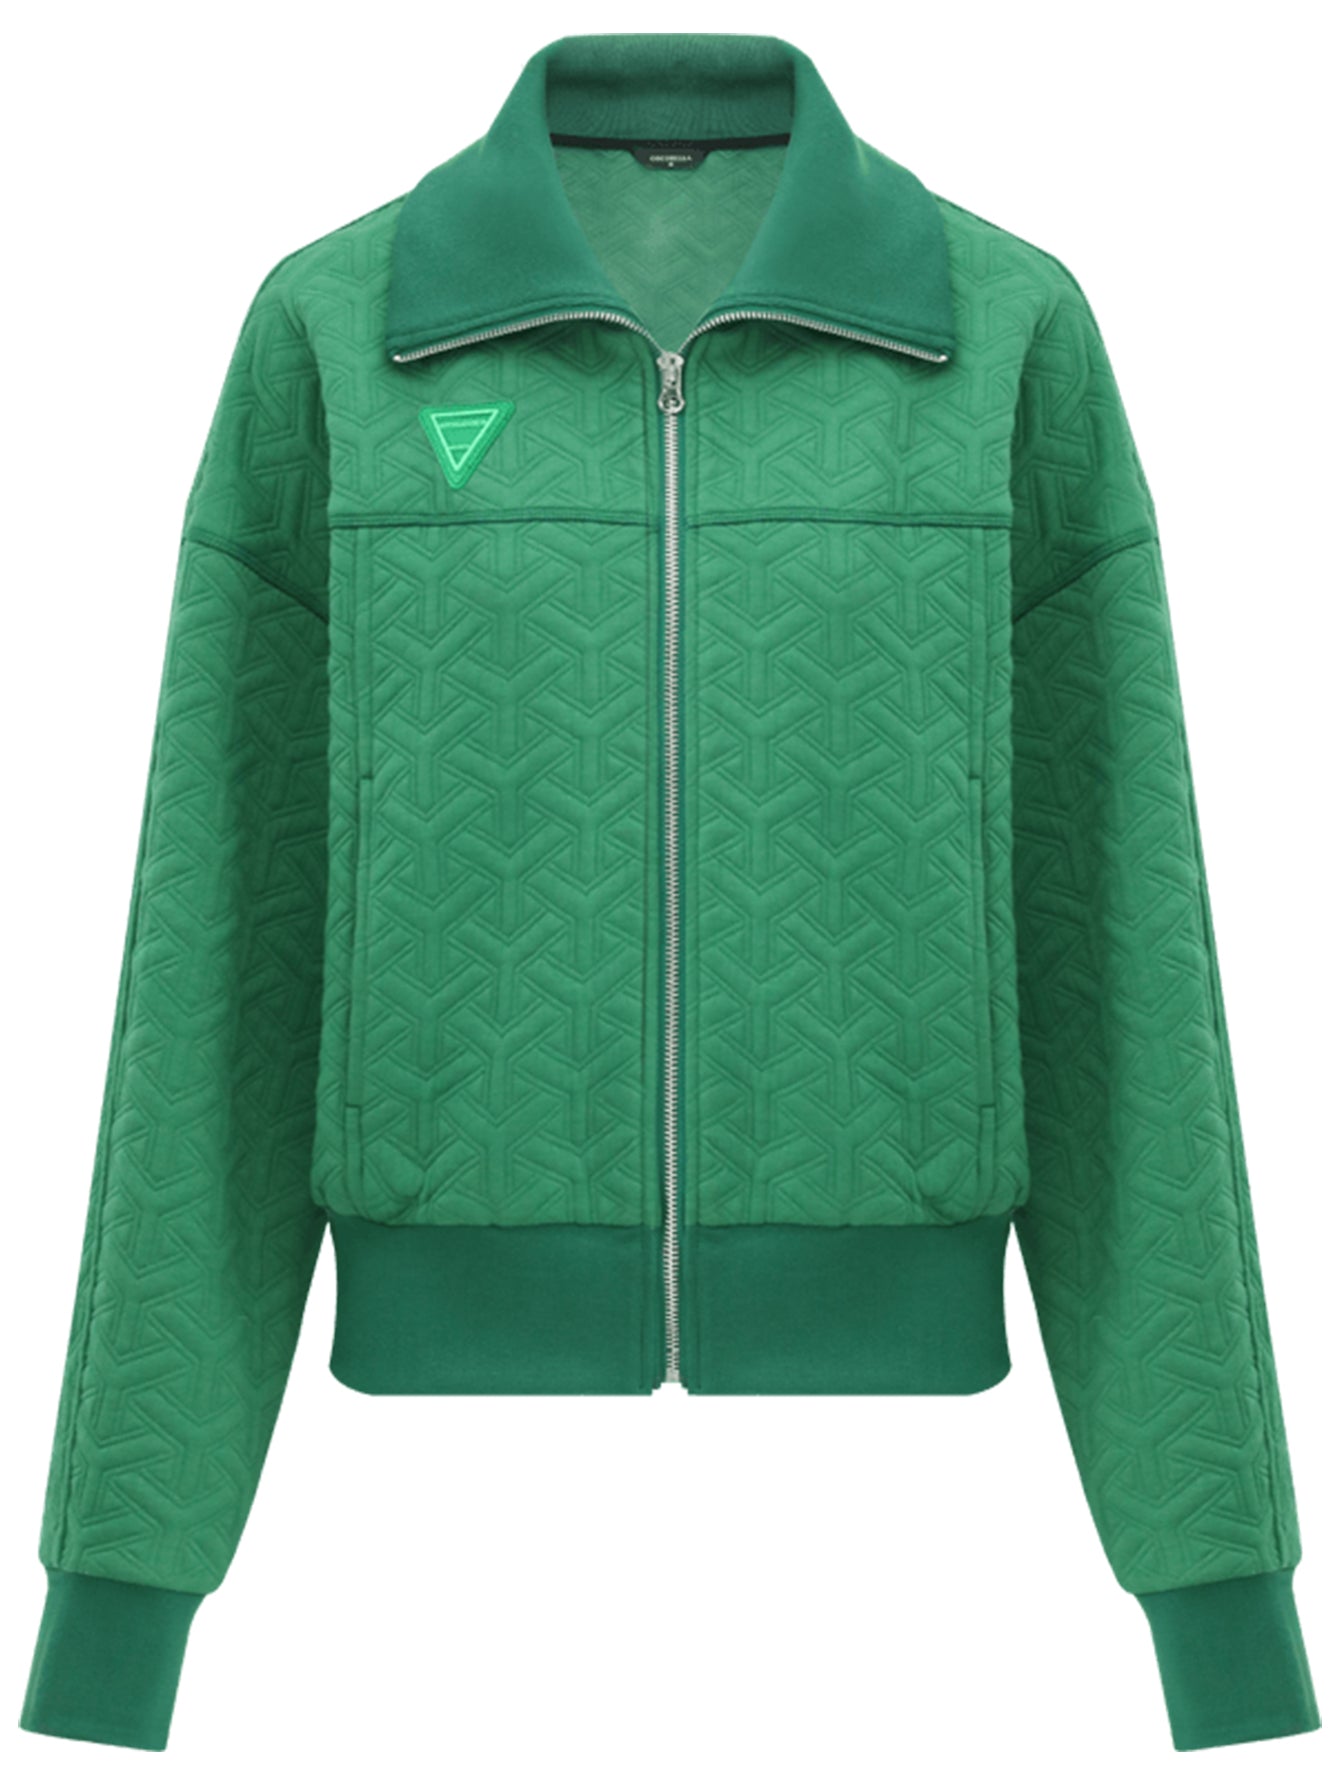 turtleneck-zip-through-green-windbreaker-jacket_all_green_4.jpg